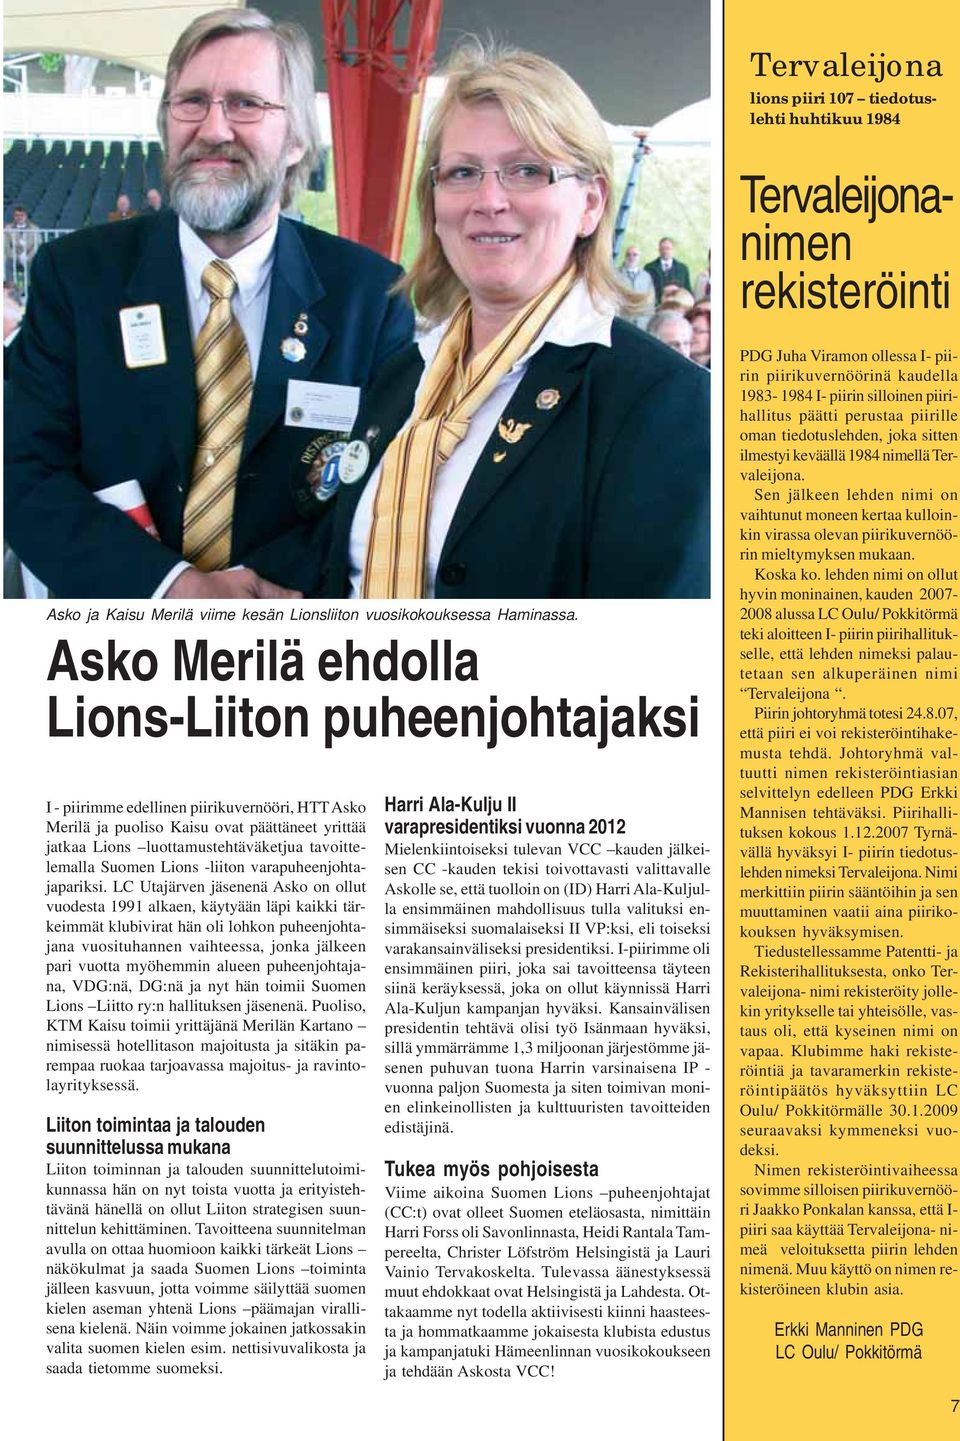 Suomen Lions -liiton varapuheenjohtajapariksi.